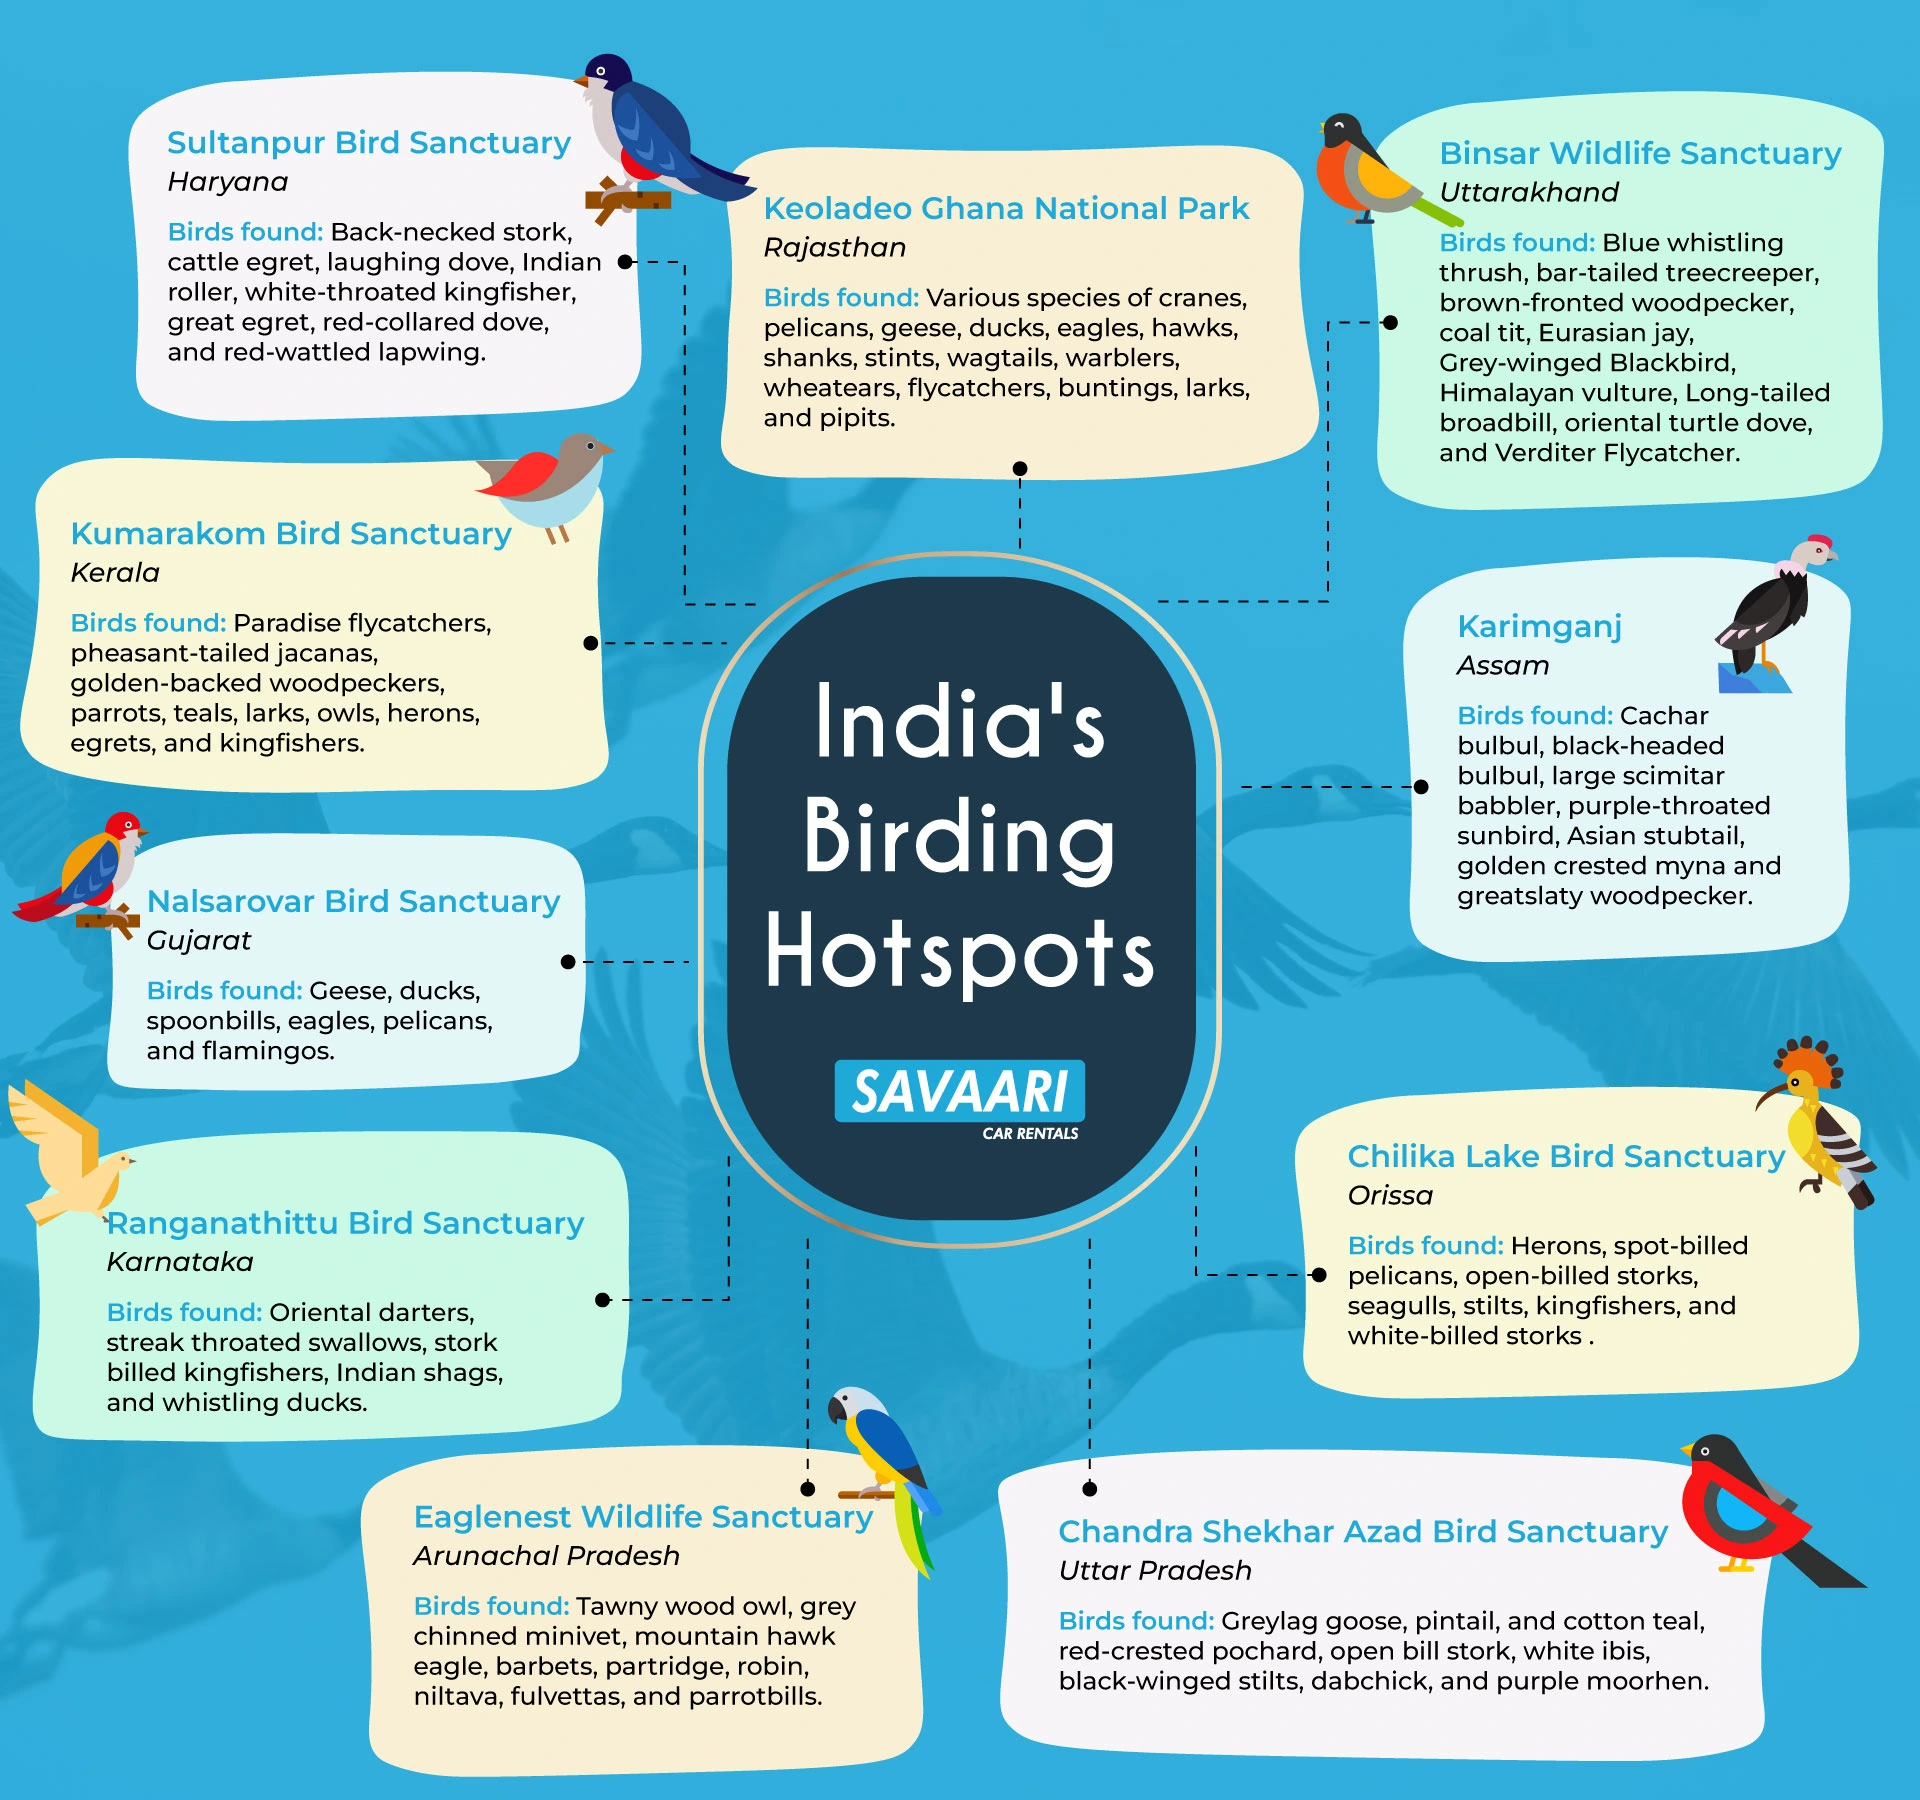 Birdwatching hotspots in India